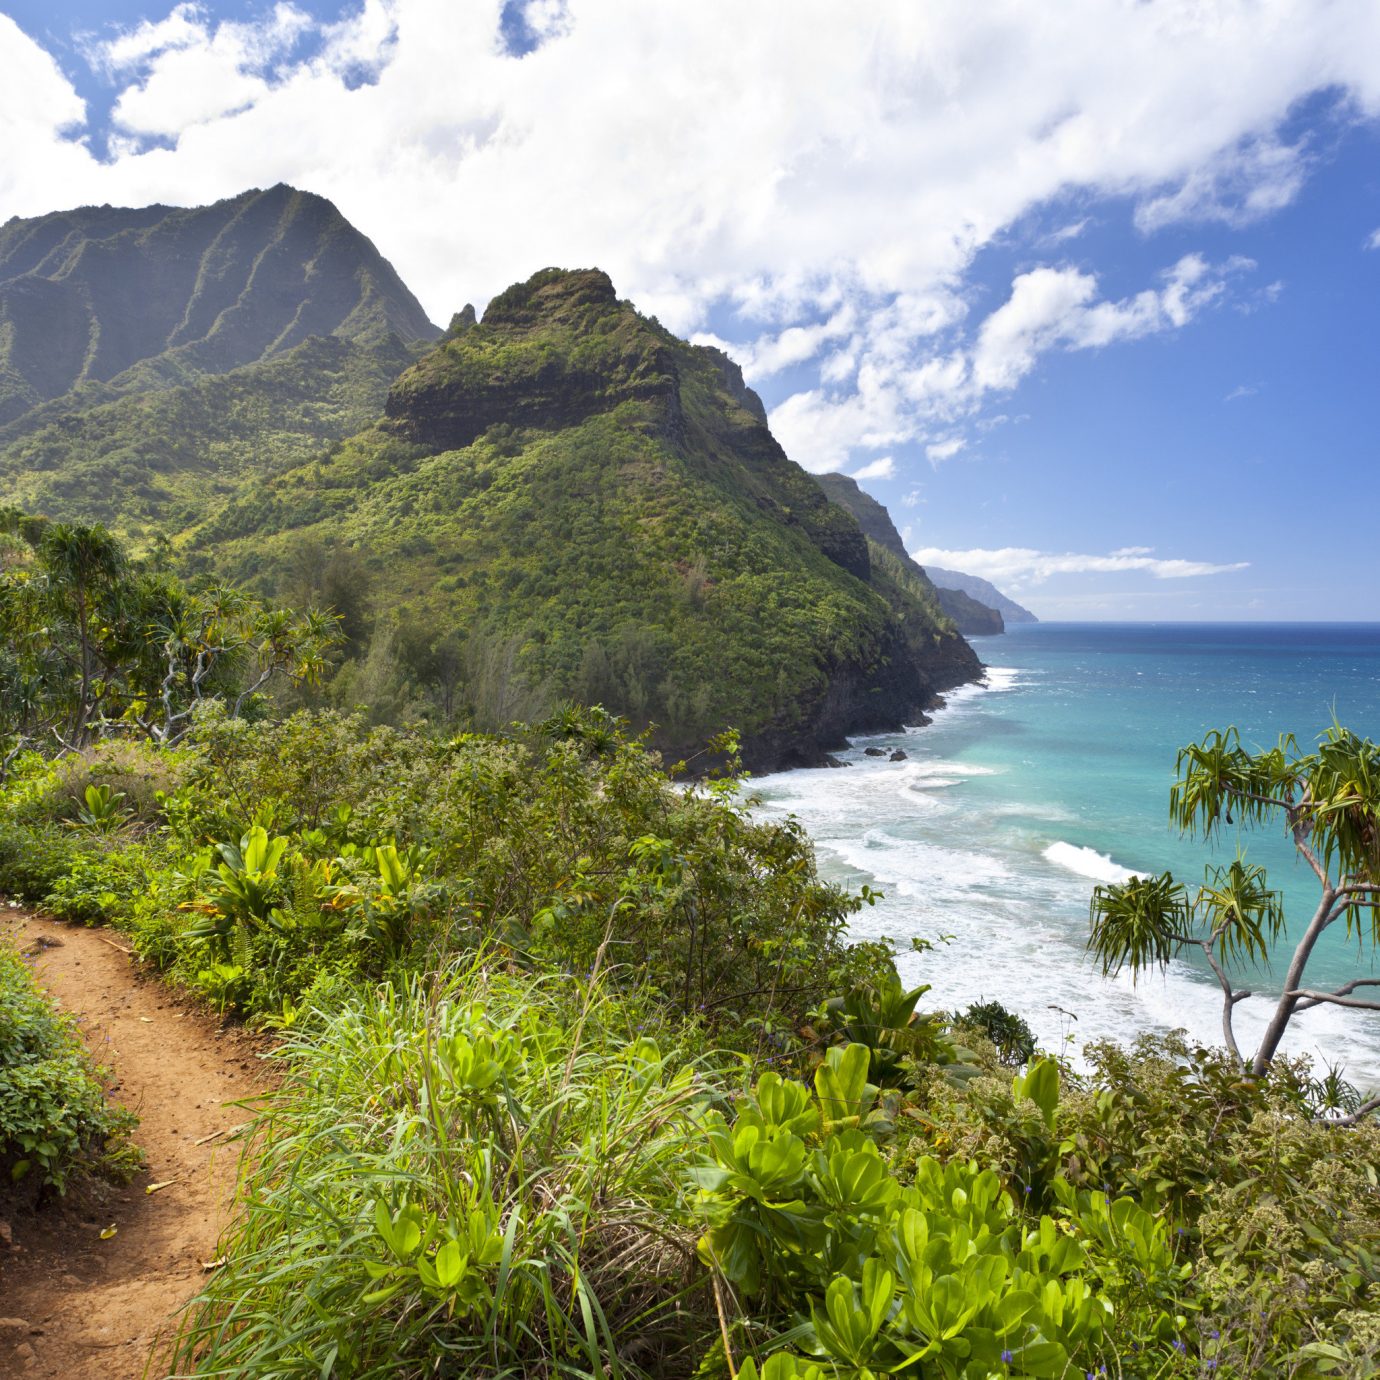 Kalula Trail in Kauai